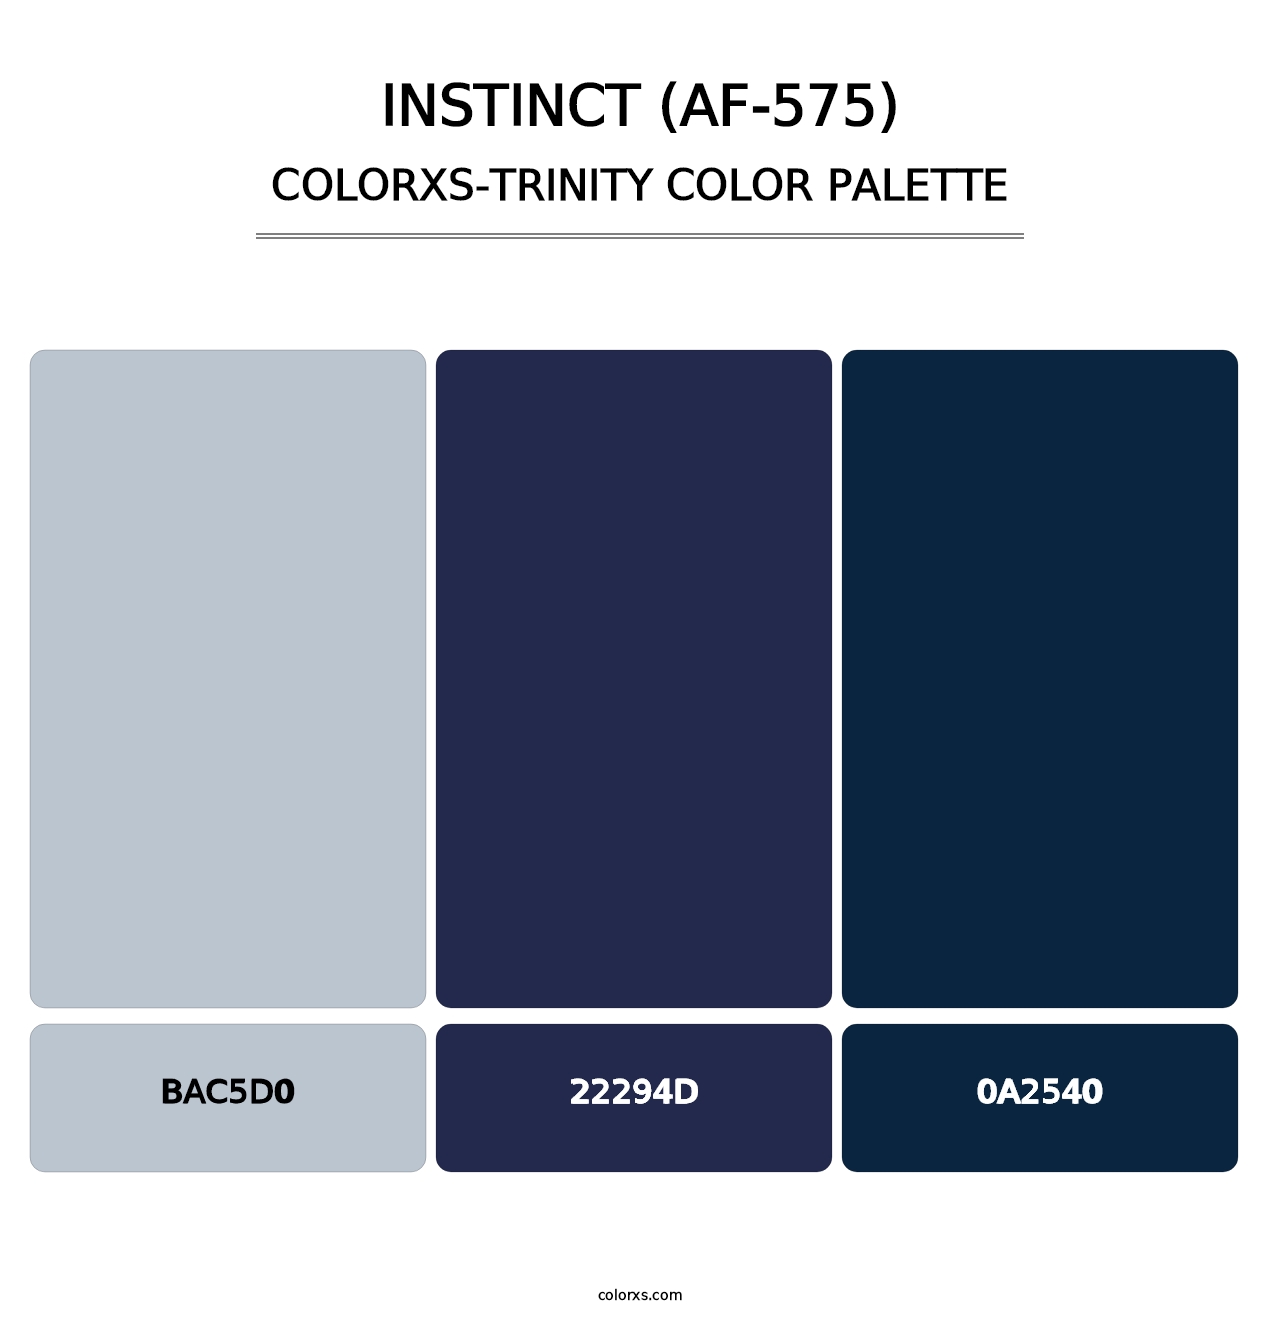 Instinct (AF-575) - Colorxs Trinity Palette